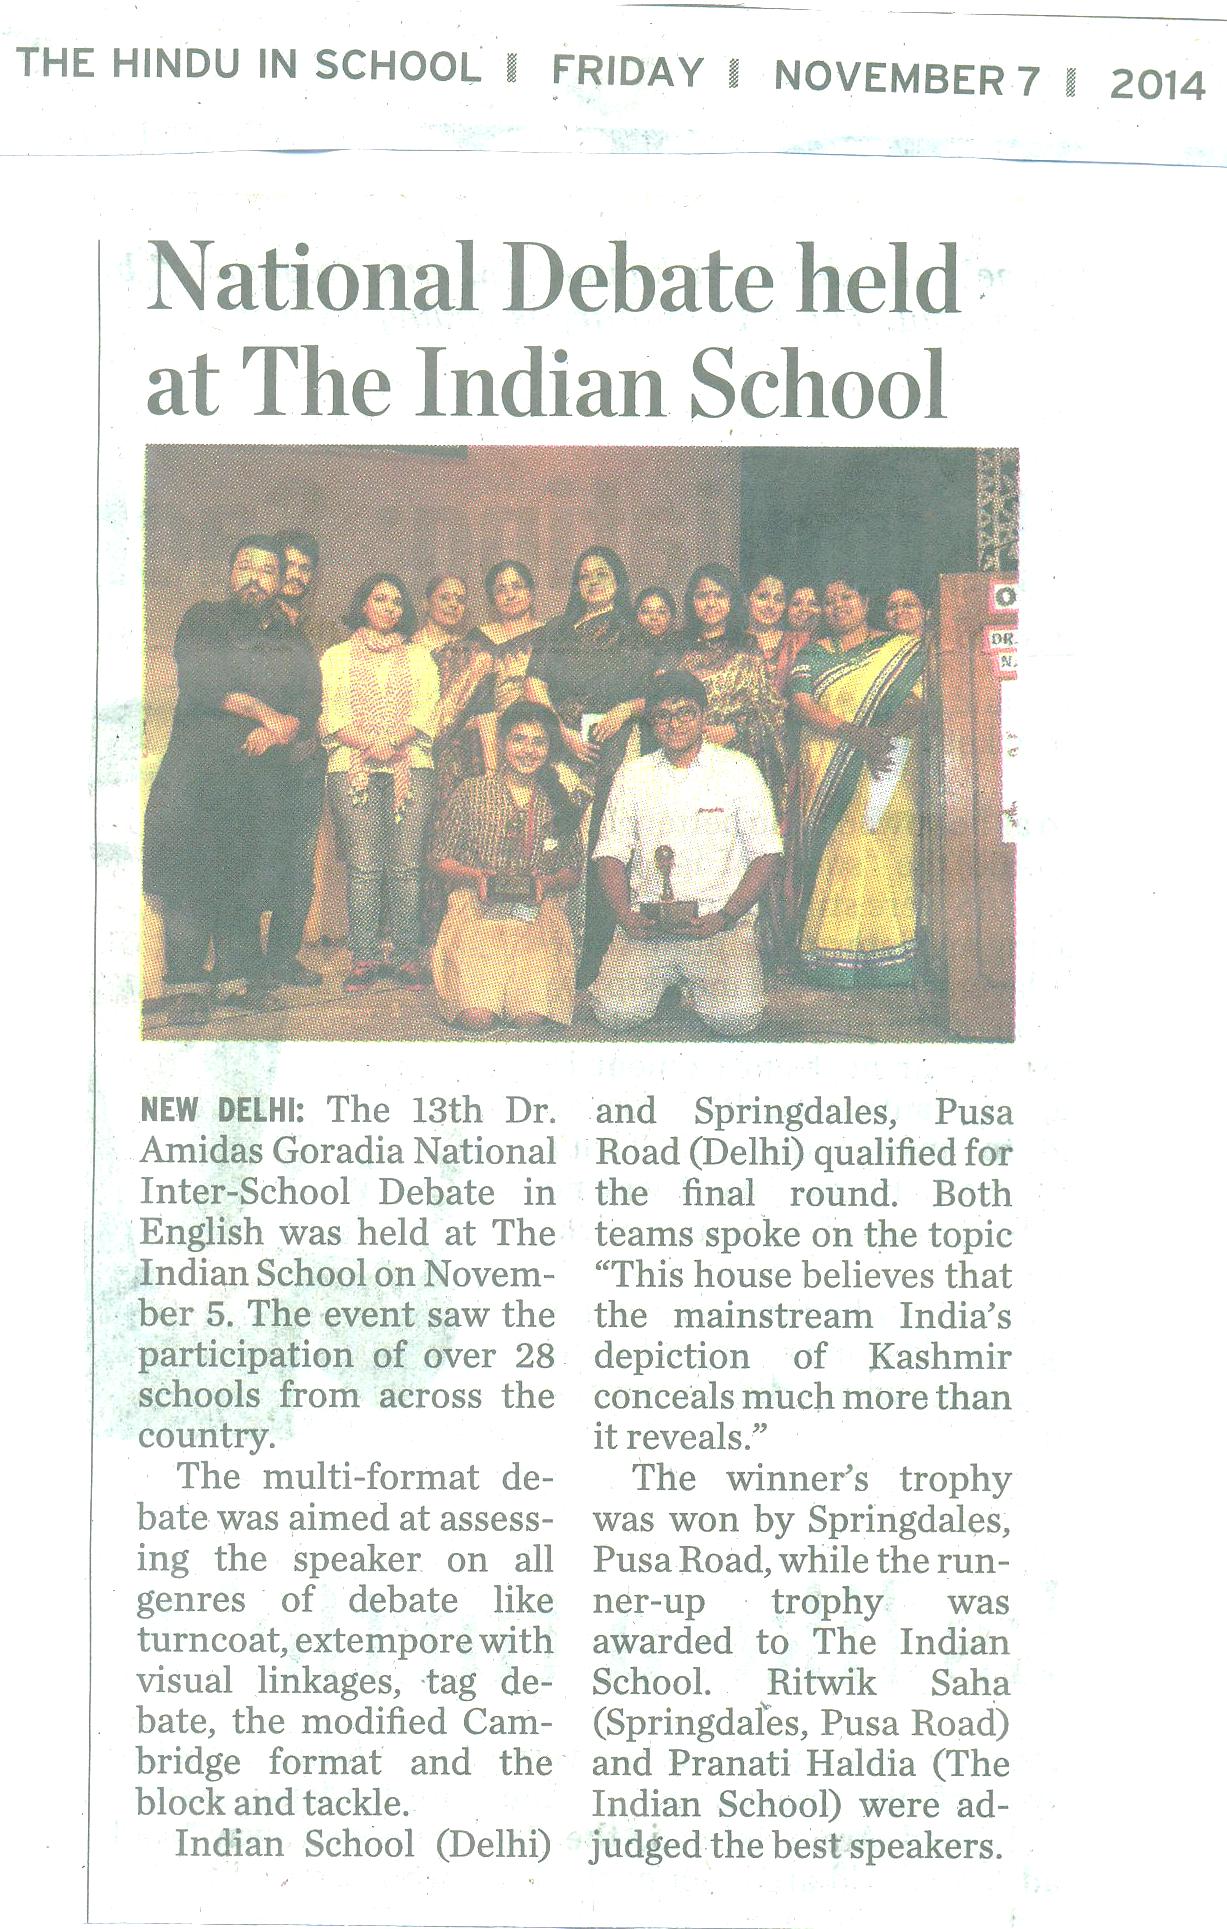 THE HINDU IN SCHOOL, FRIDAY, 7 NOVEMBER,2014